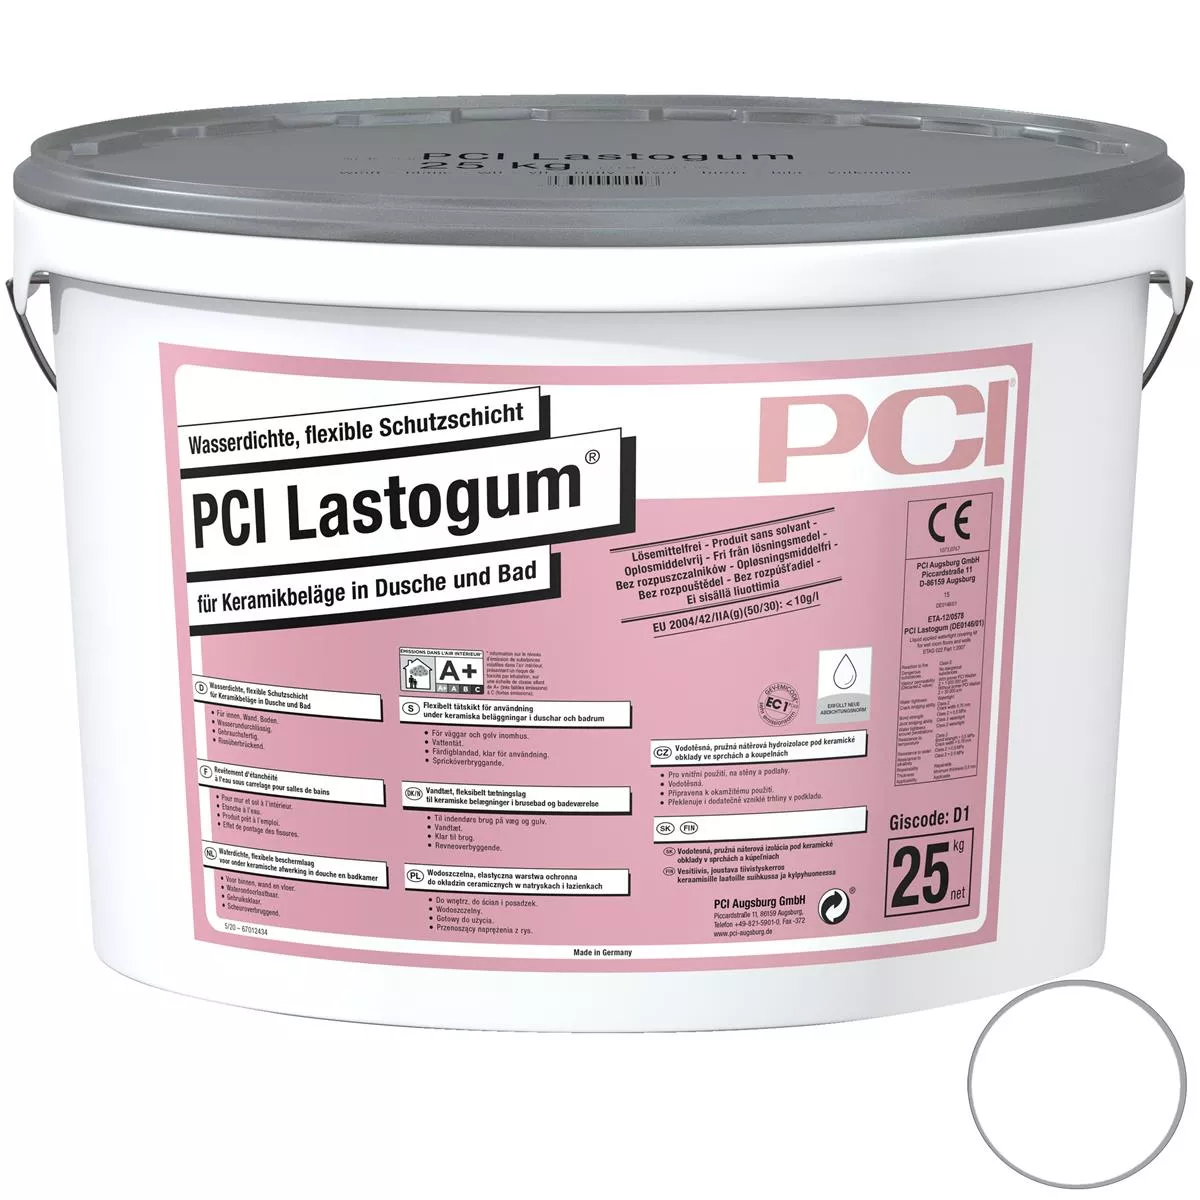 PCI Lastogum Waterproof Flexible Protective Sheet White 25KG